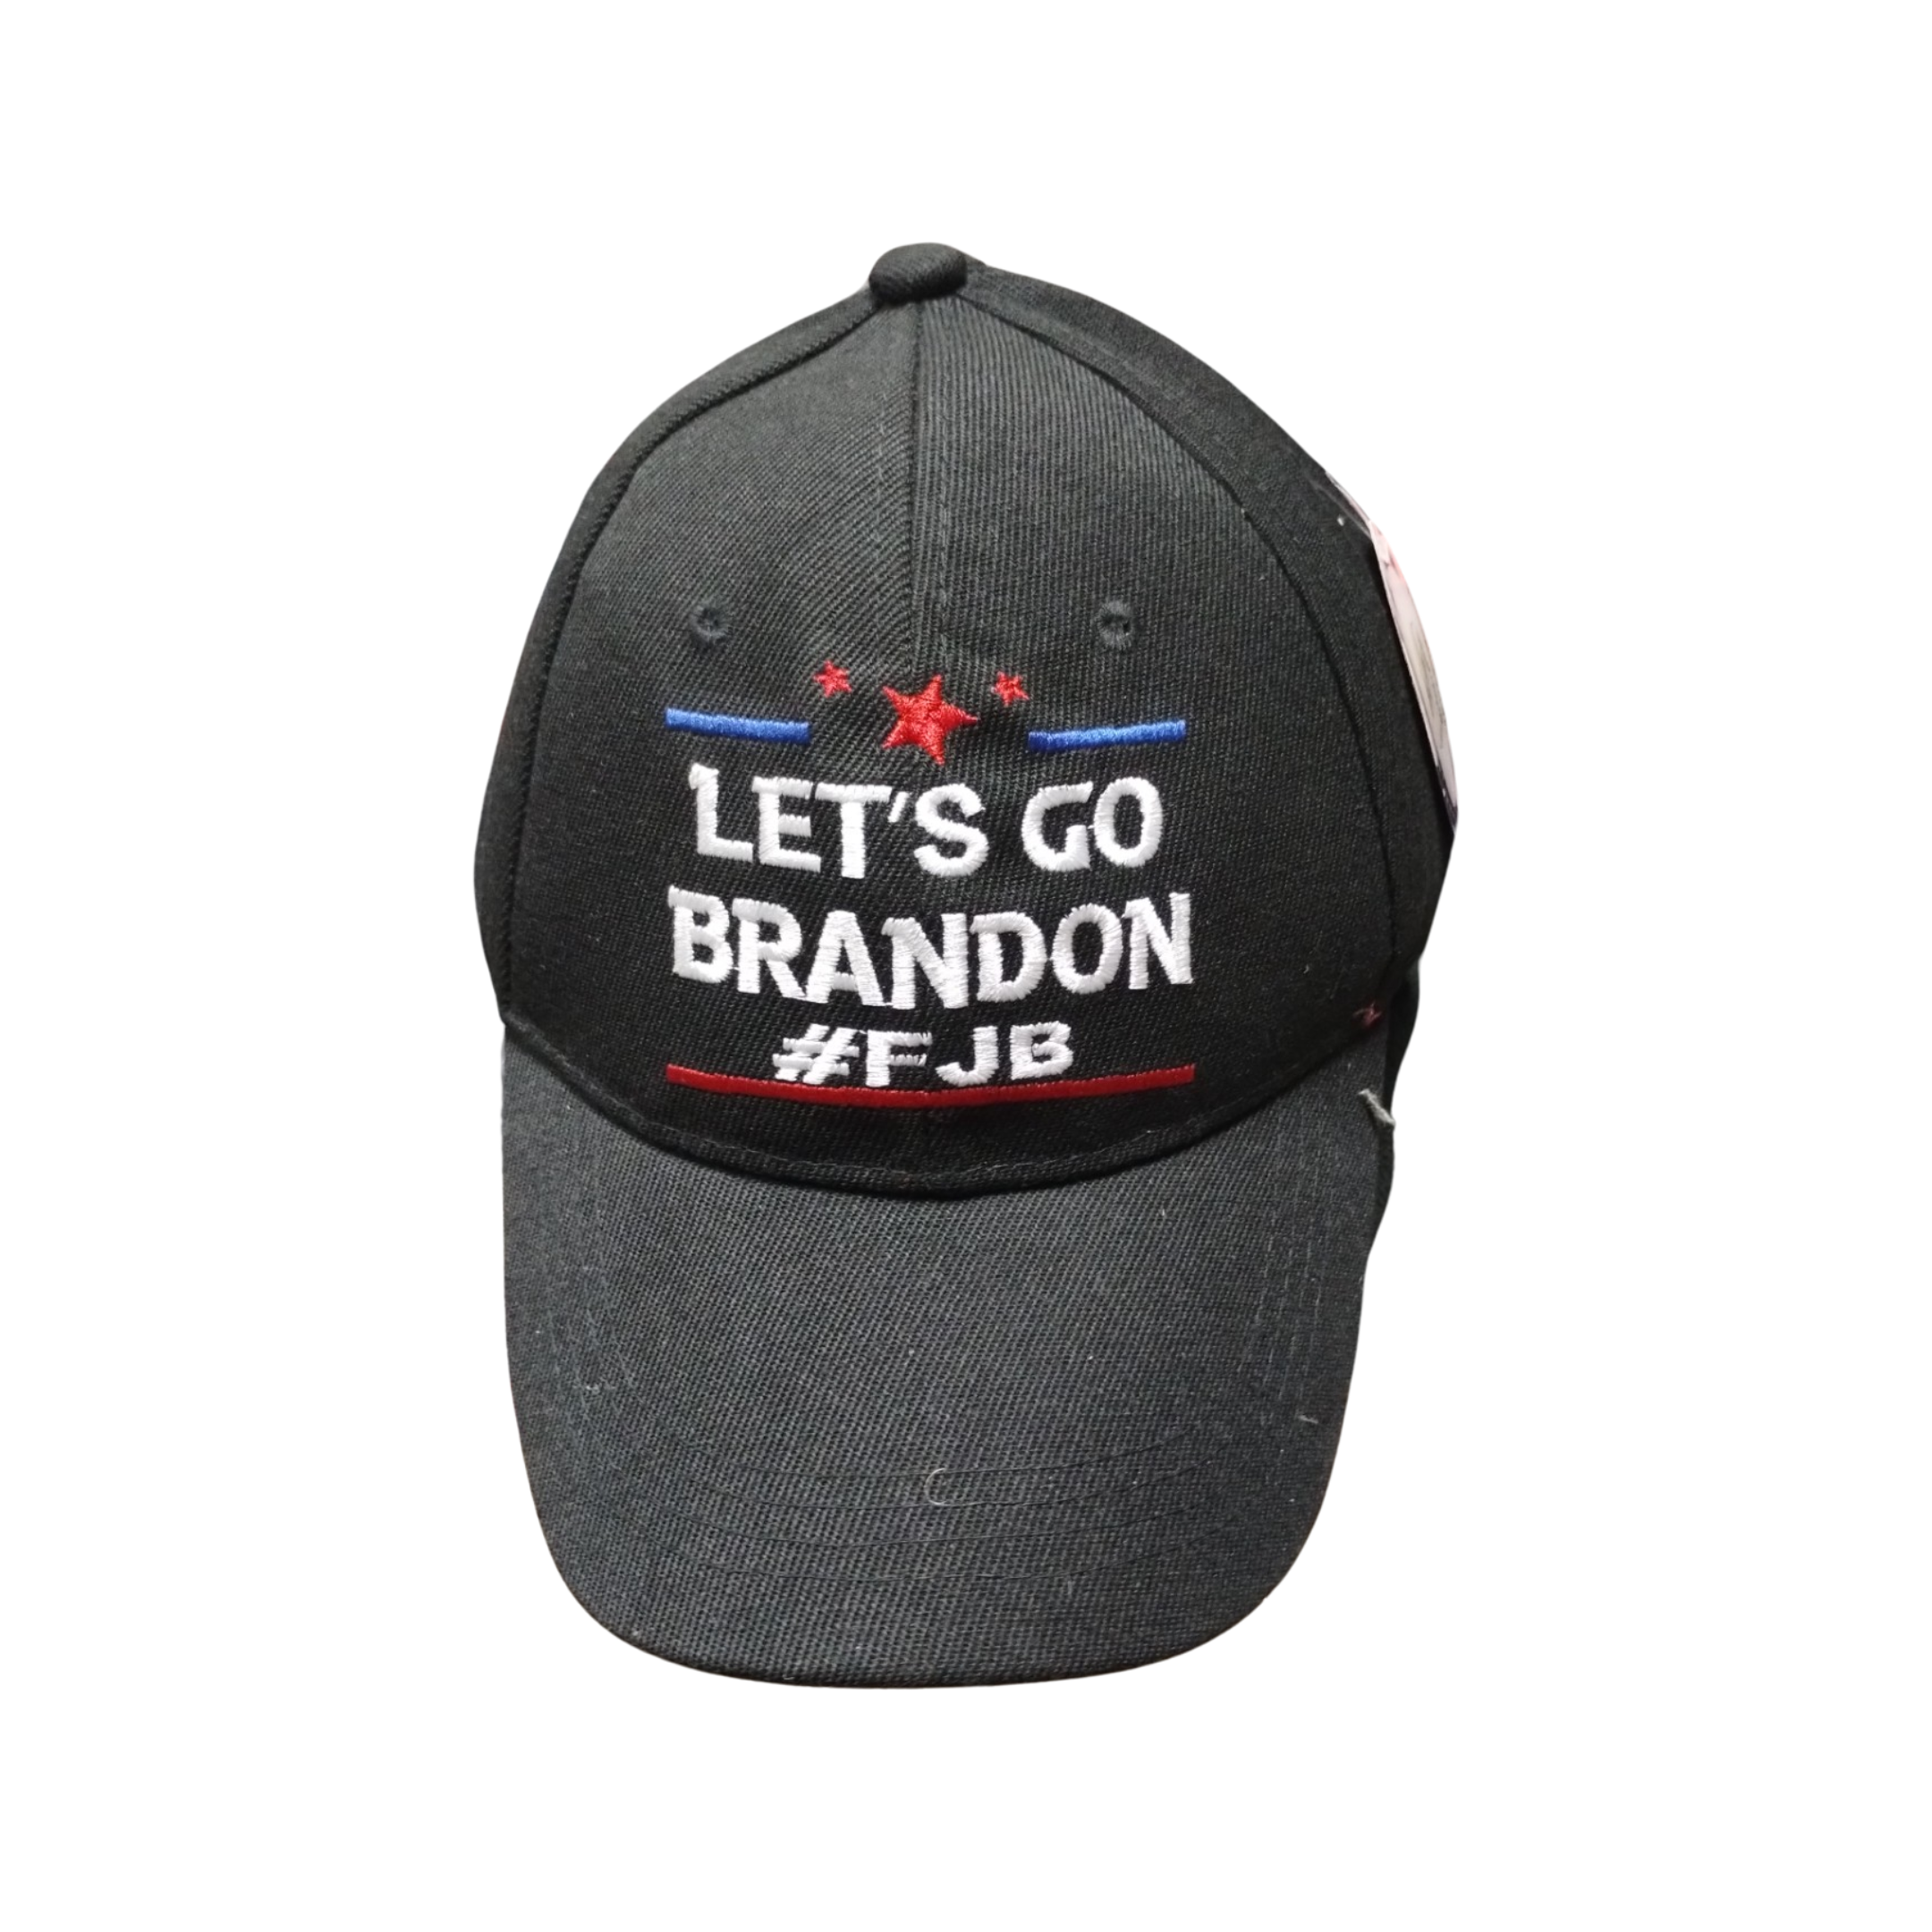 Let's Go Brandon #FJB BASEBALL CAP - Political Statement Headwear